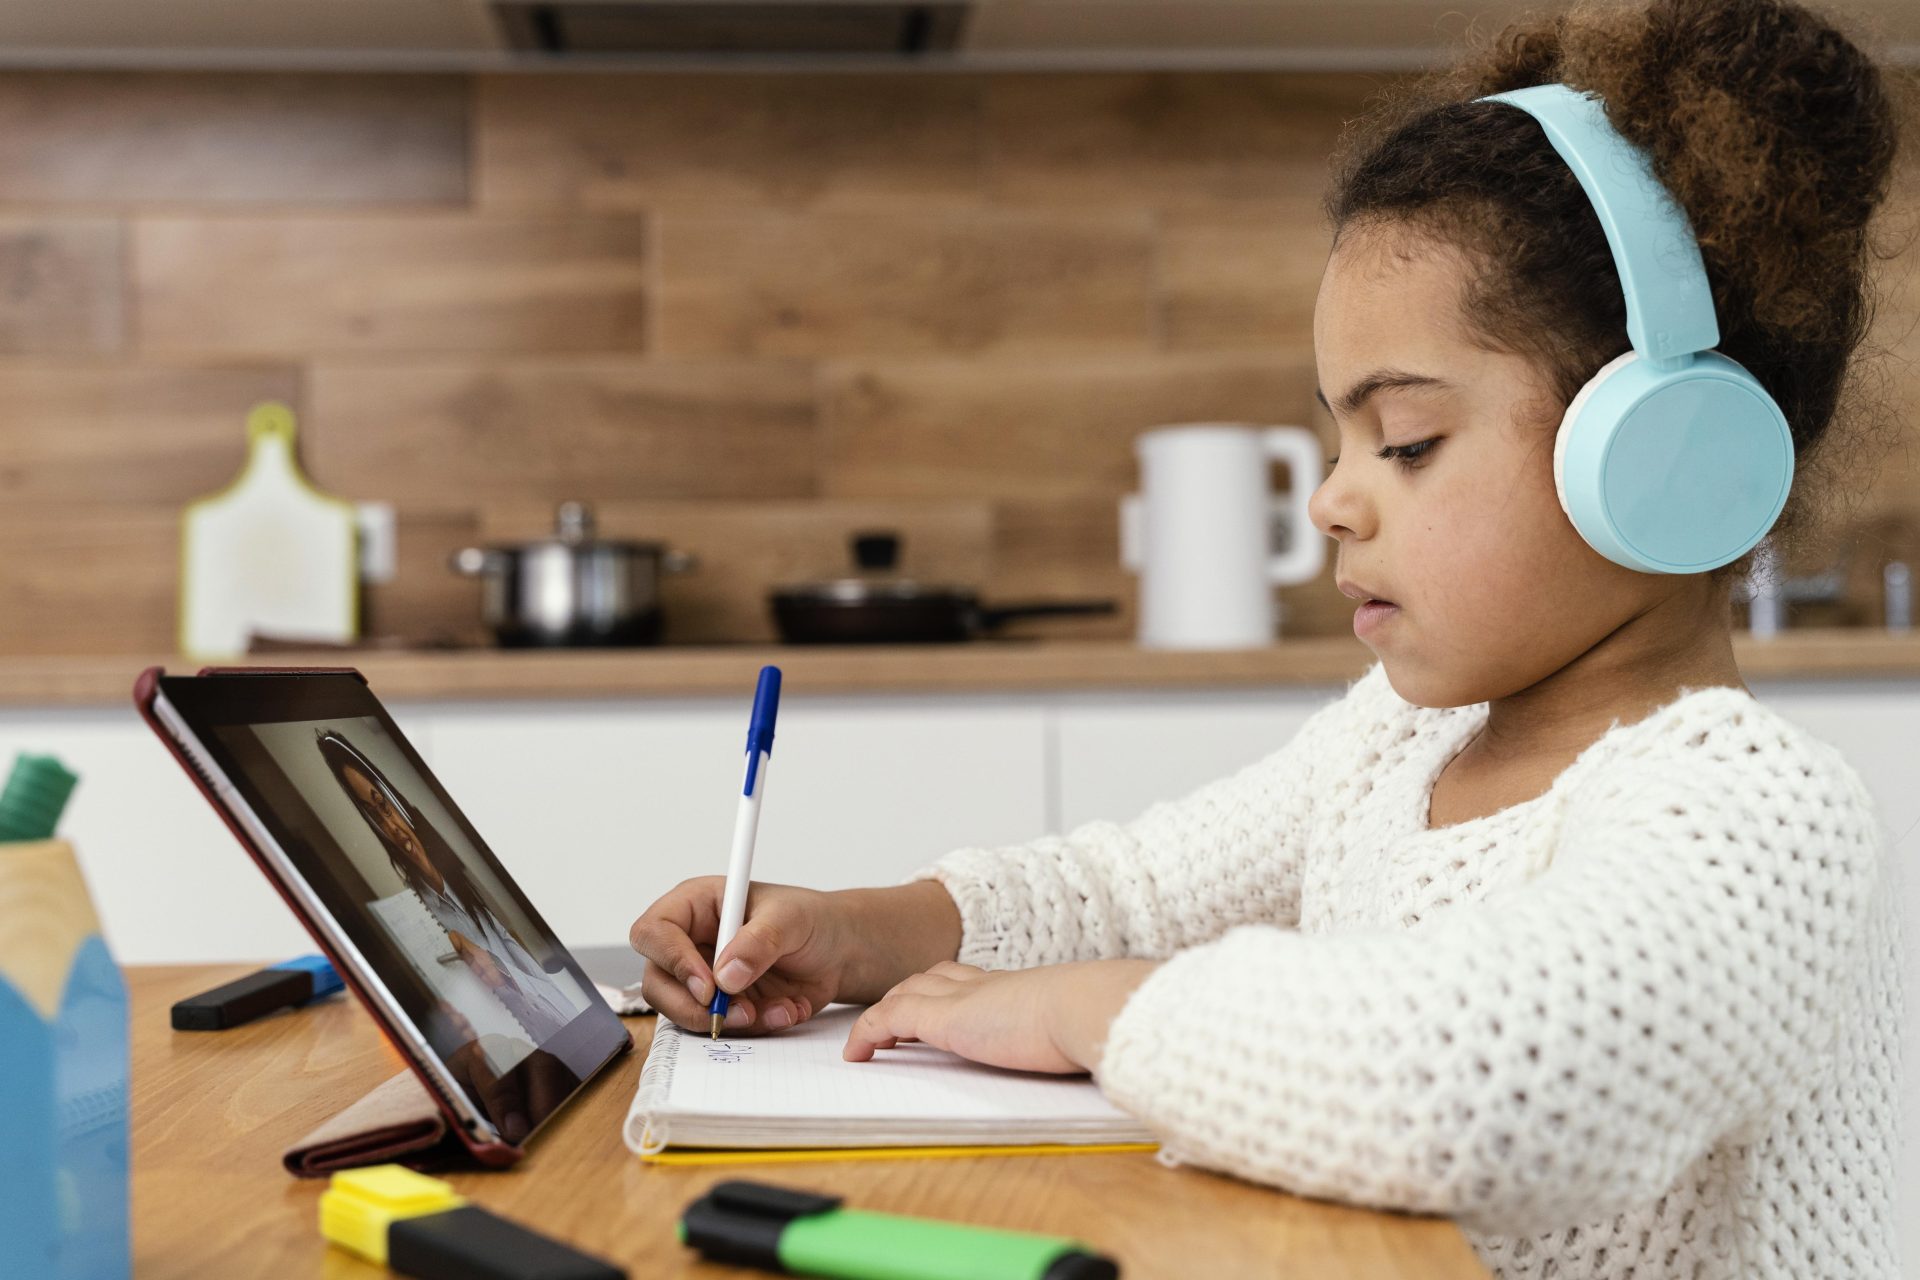 Atlanta Public Schools IEP Online: Virtual Learning for Individualized Education Programs